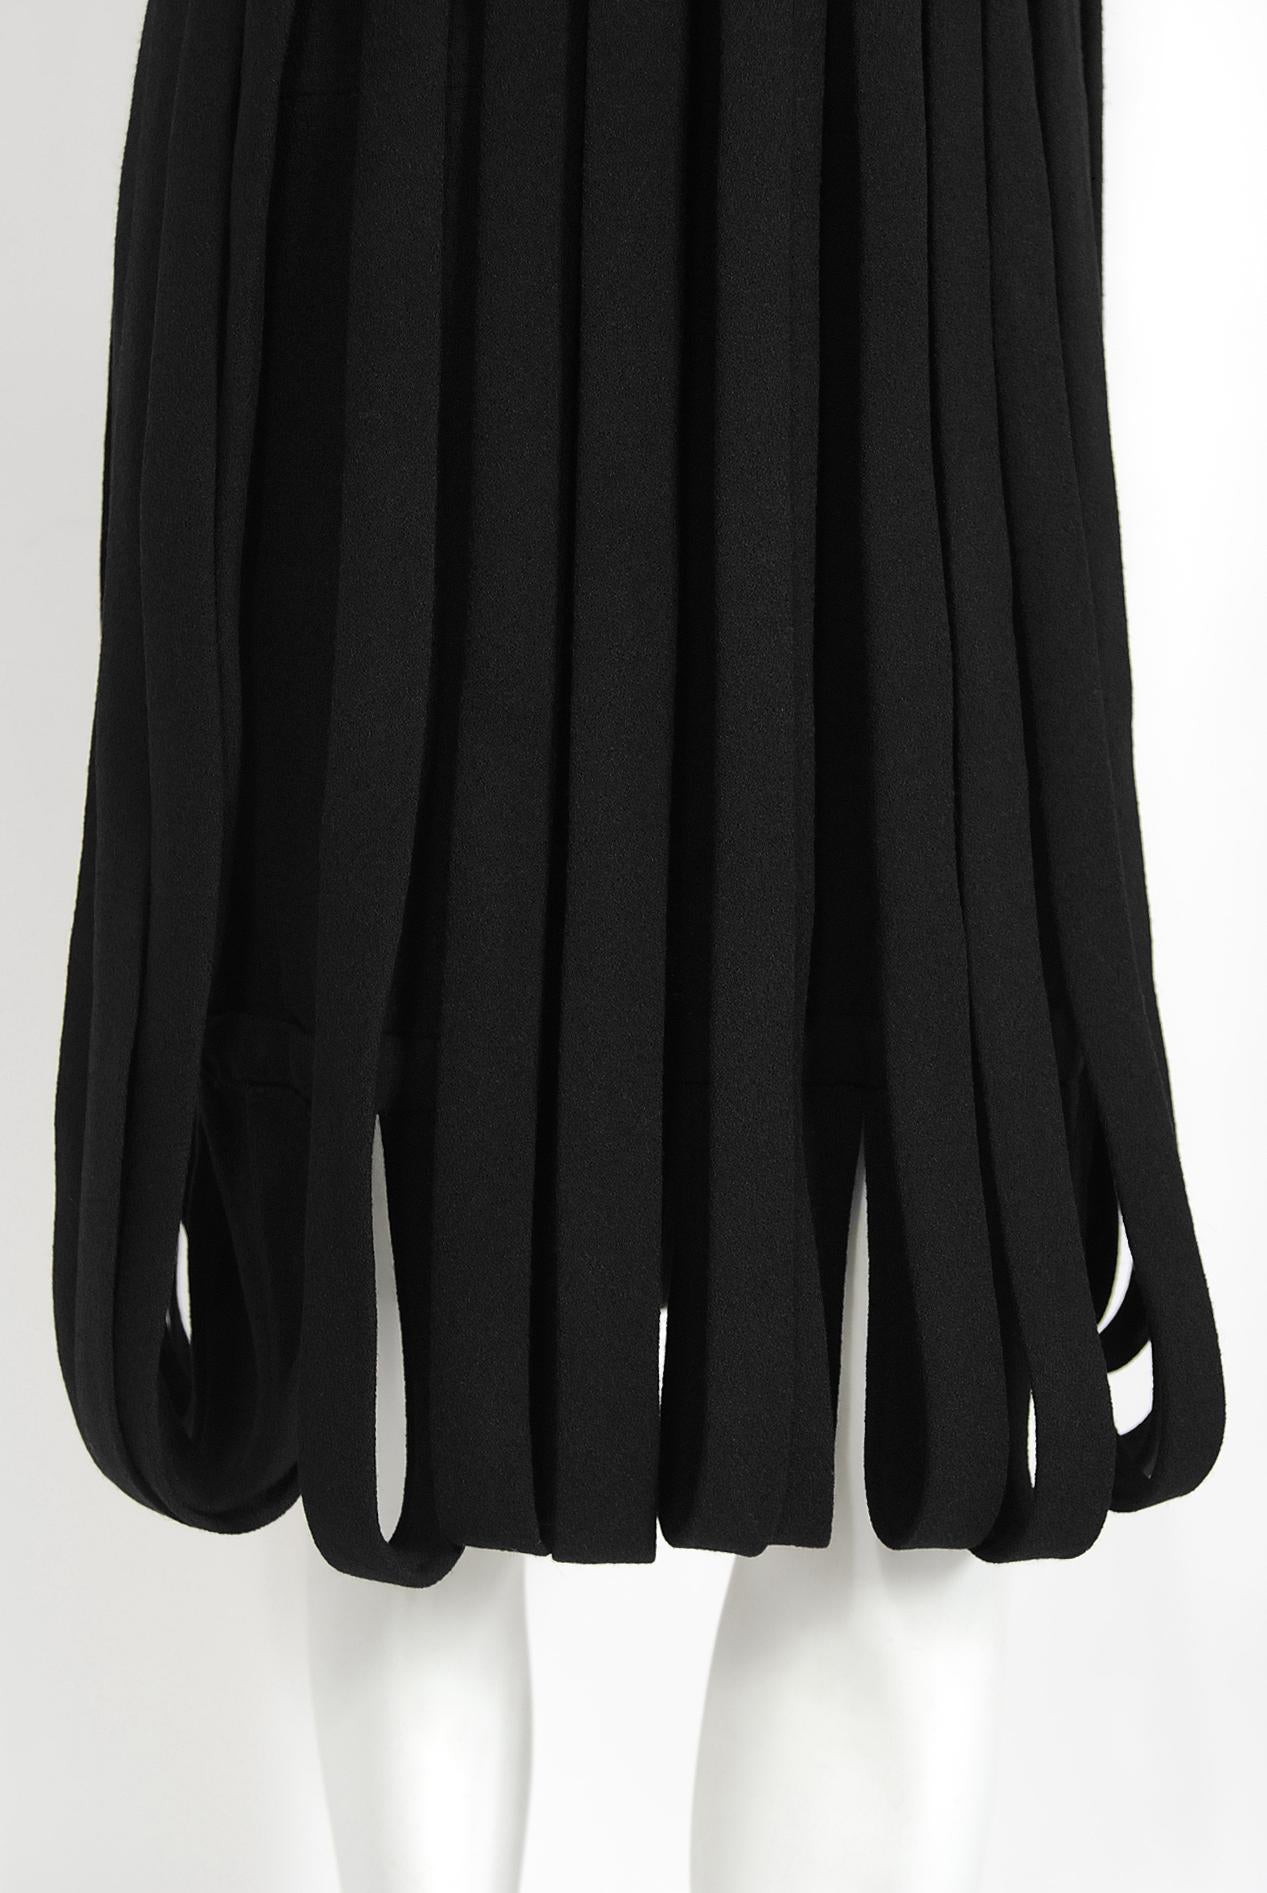 Vintage 1967 Pierre Cardin Documented Black Wool Space-Age Mod Carwash Dress 4